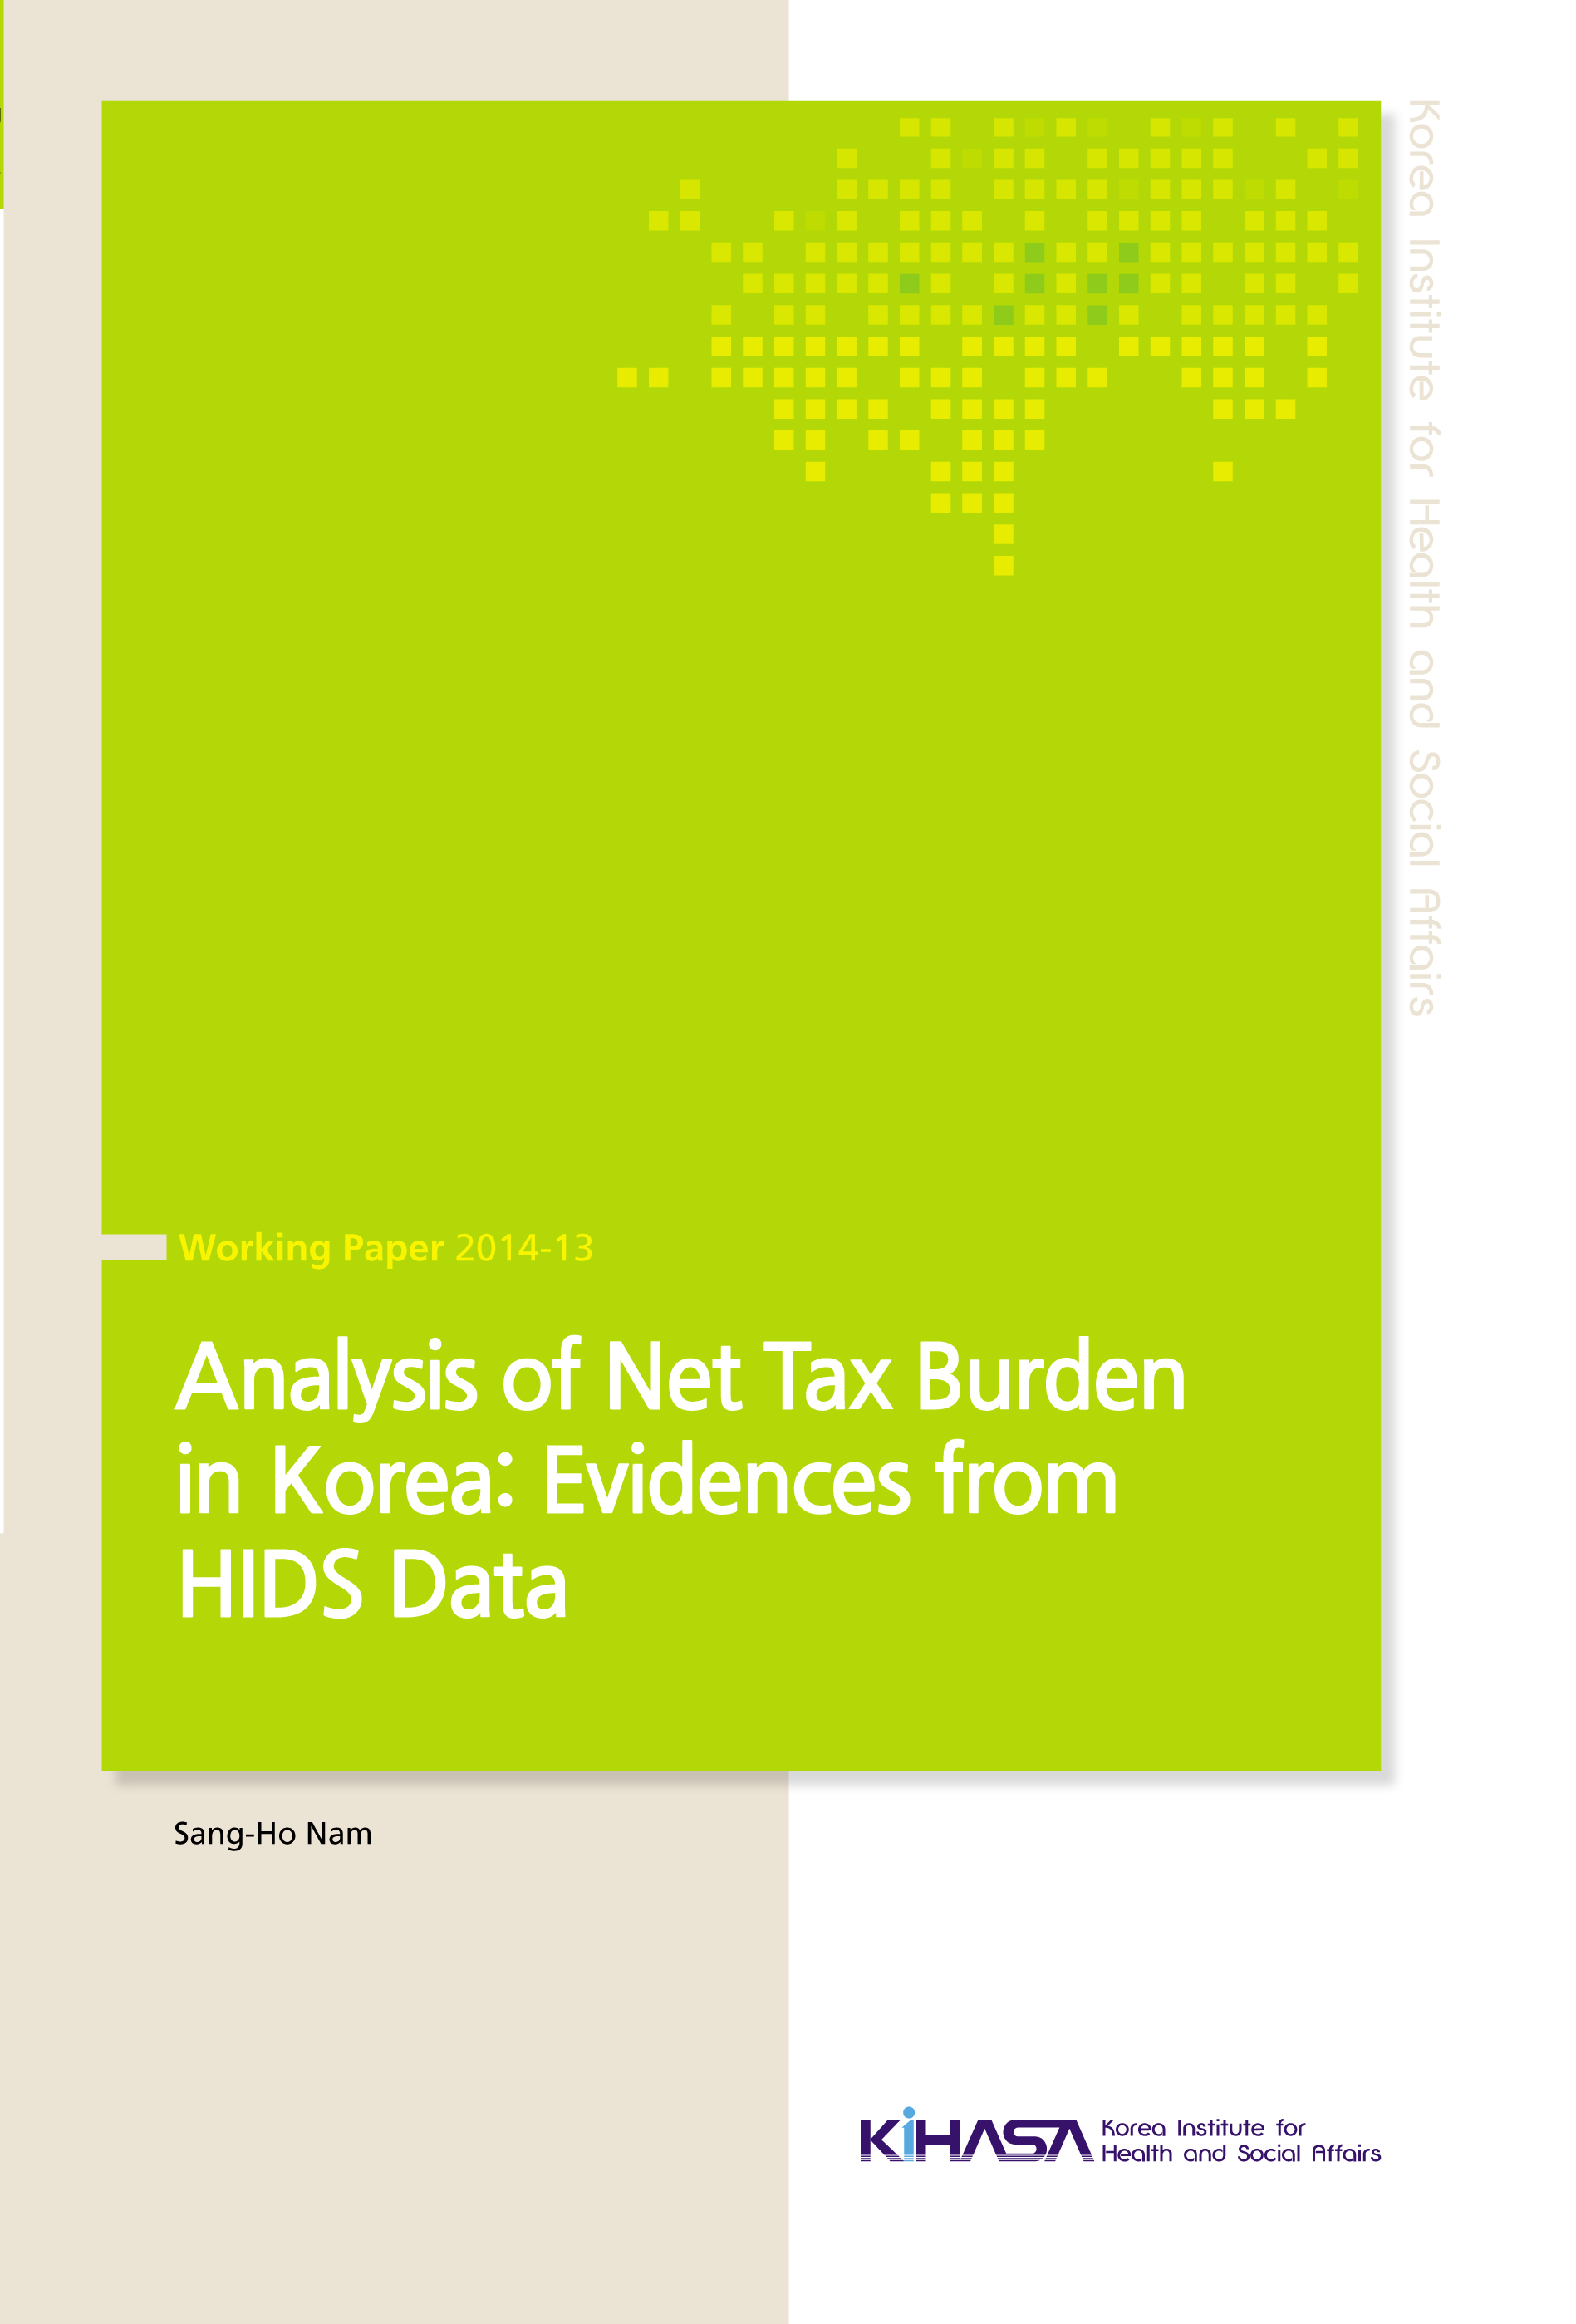 Analysis of Net Tax Burden in Korea: Evidences from HIDS Data